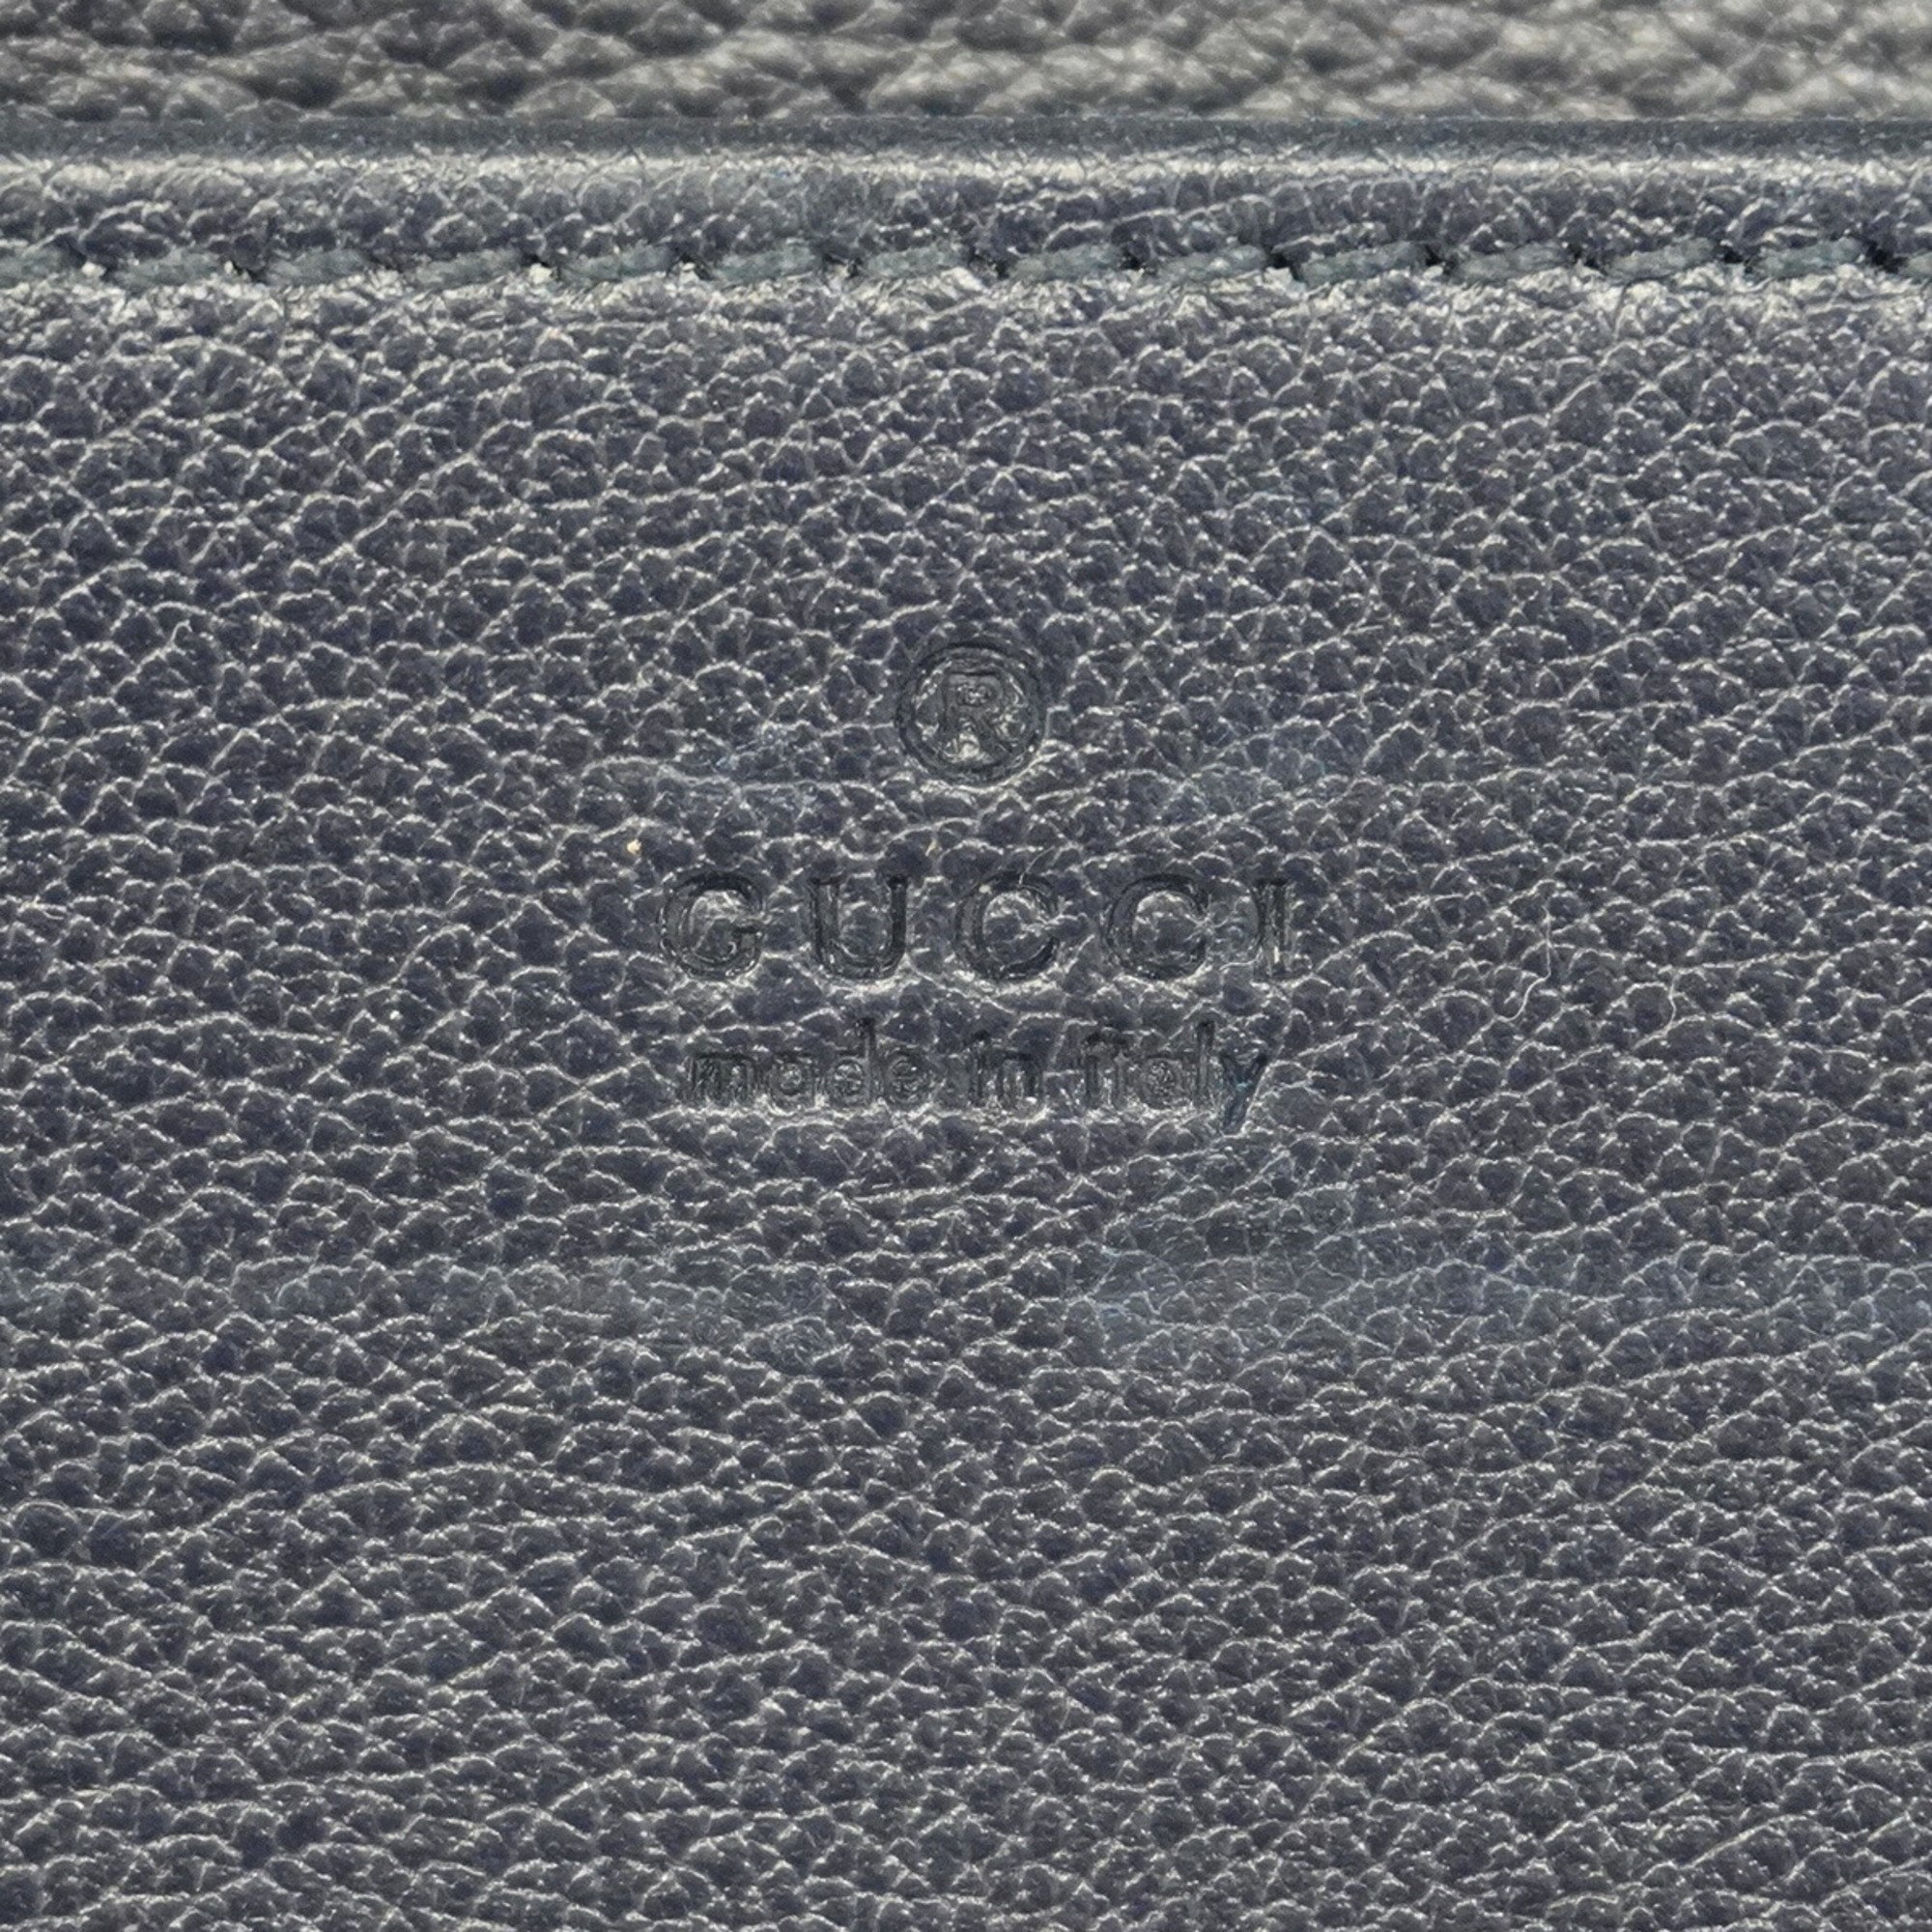 Gucci Shoulder Wallet 676155 Leather Navy Light Blue Women's